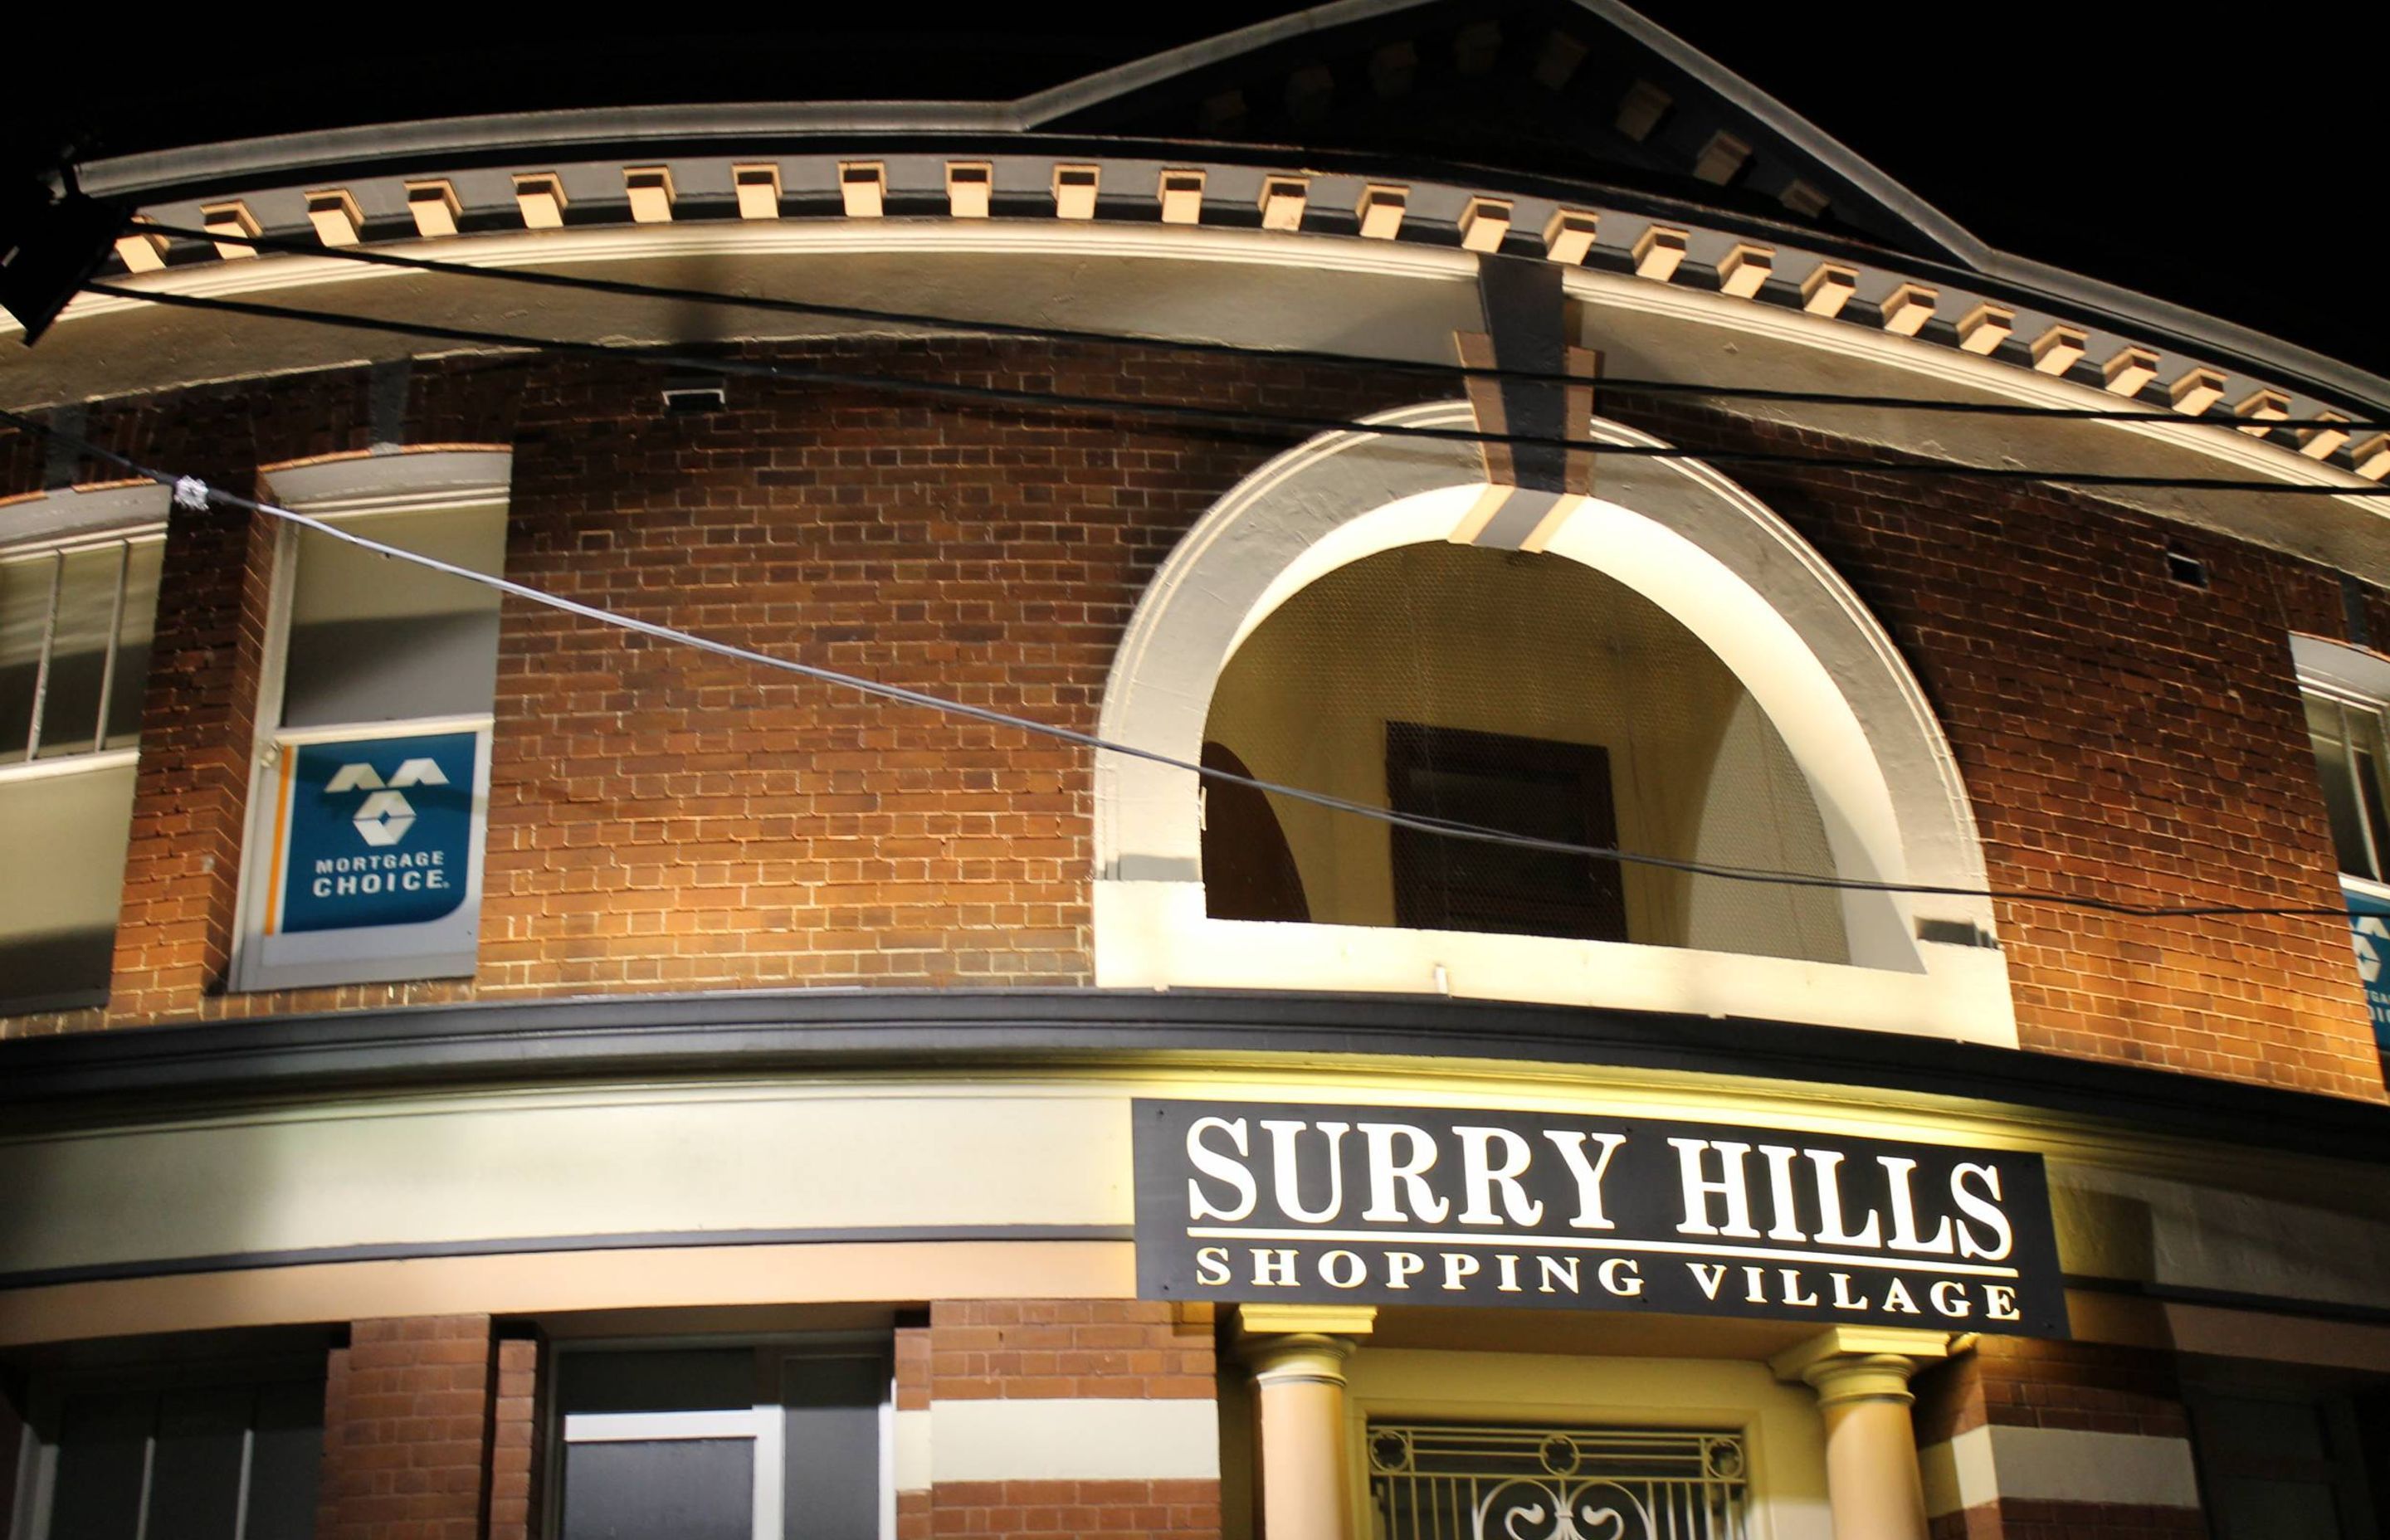 ##Surry Hills Shopping Village, NSW